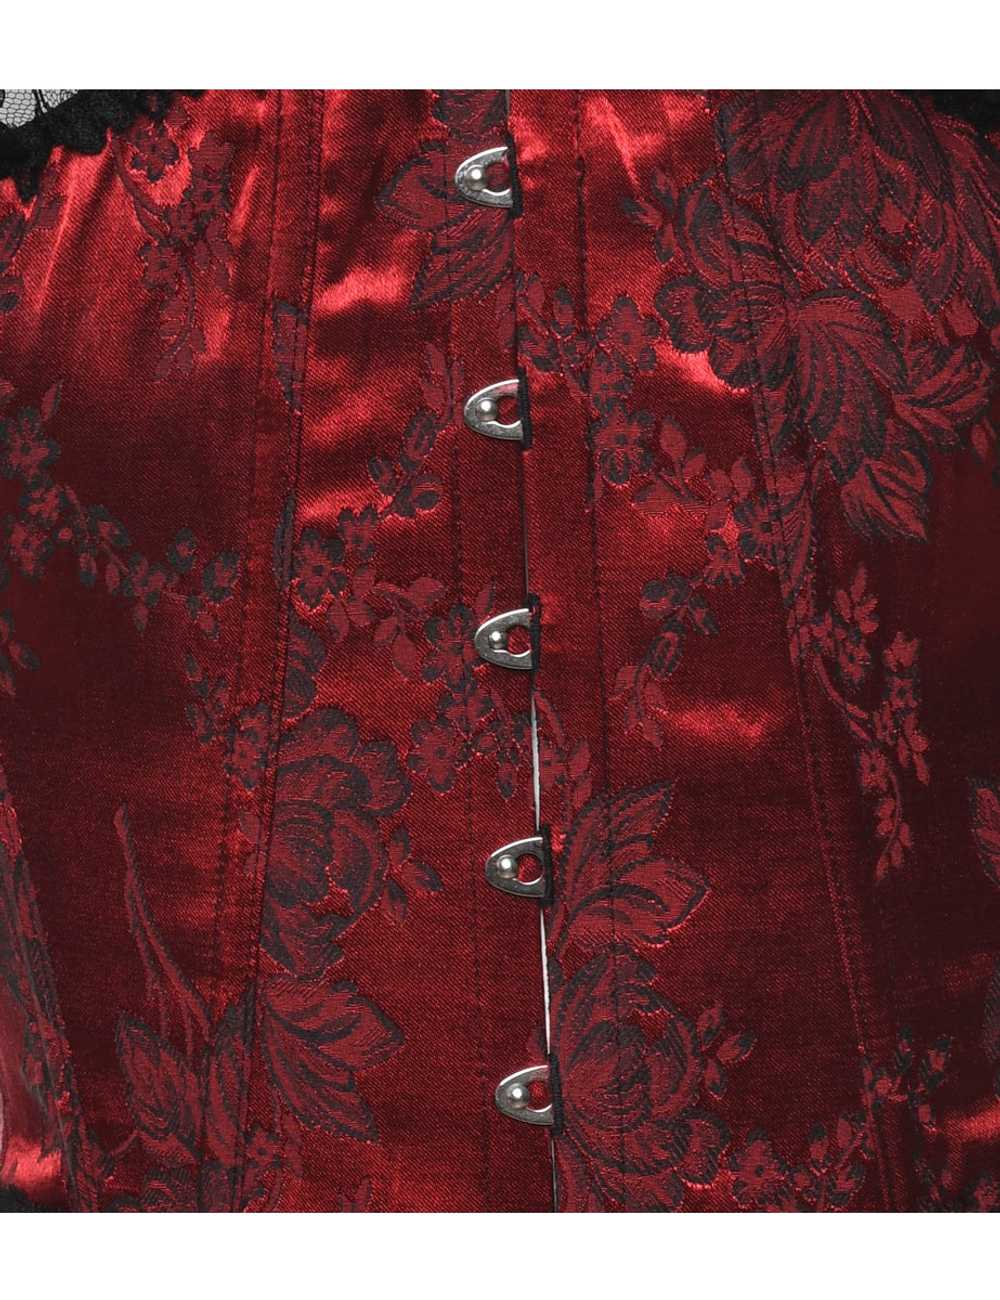 Black & Red Floral Lace Boned Corset - S - image 3